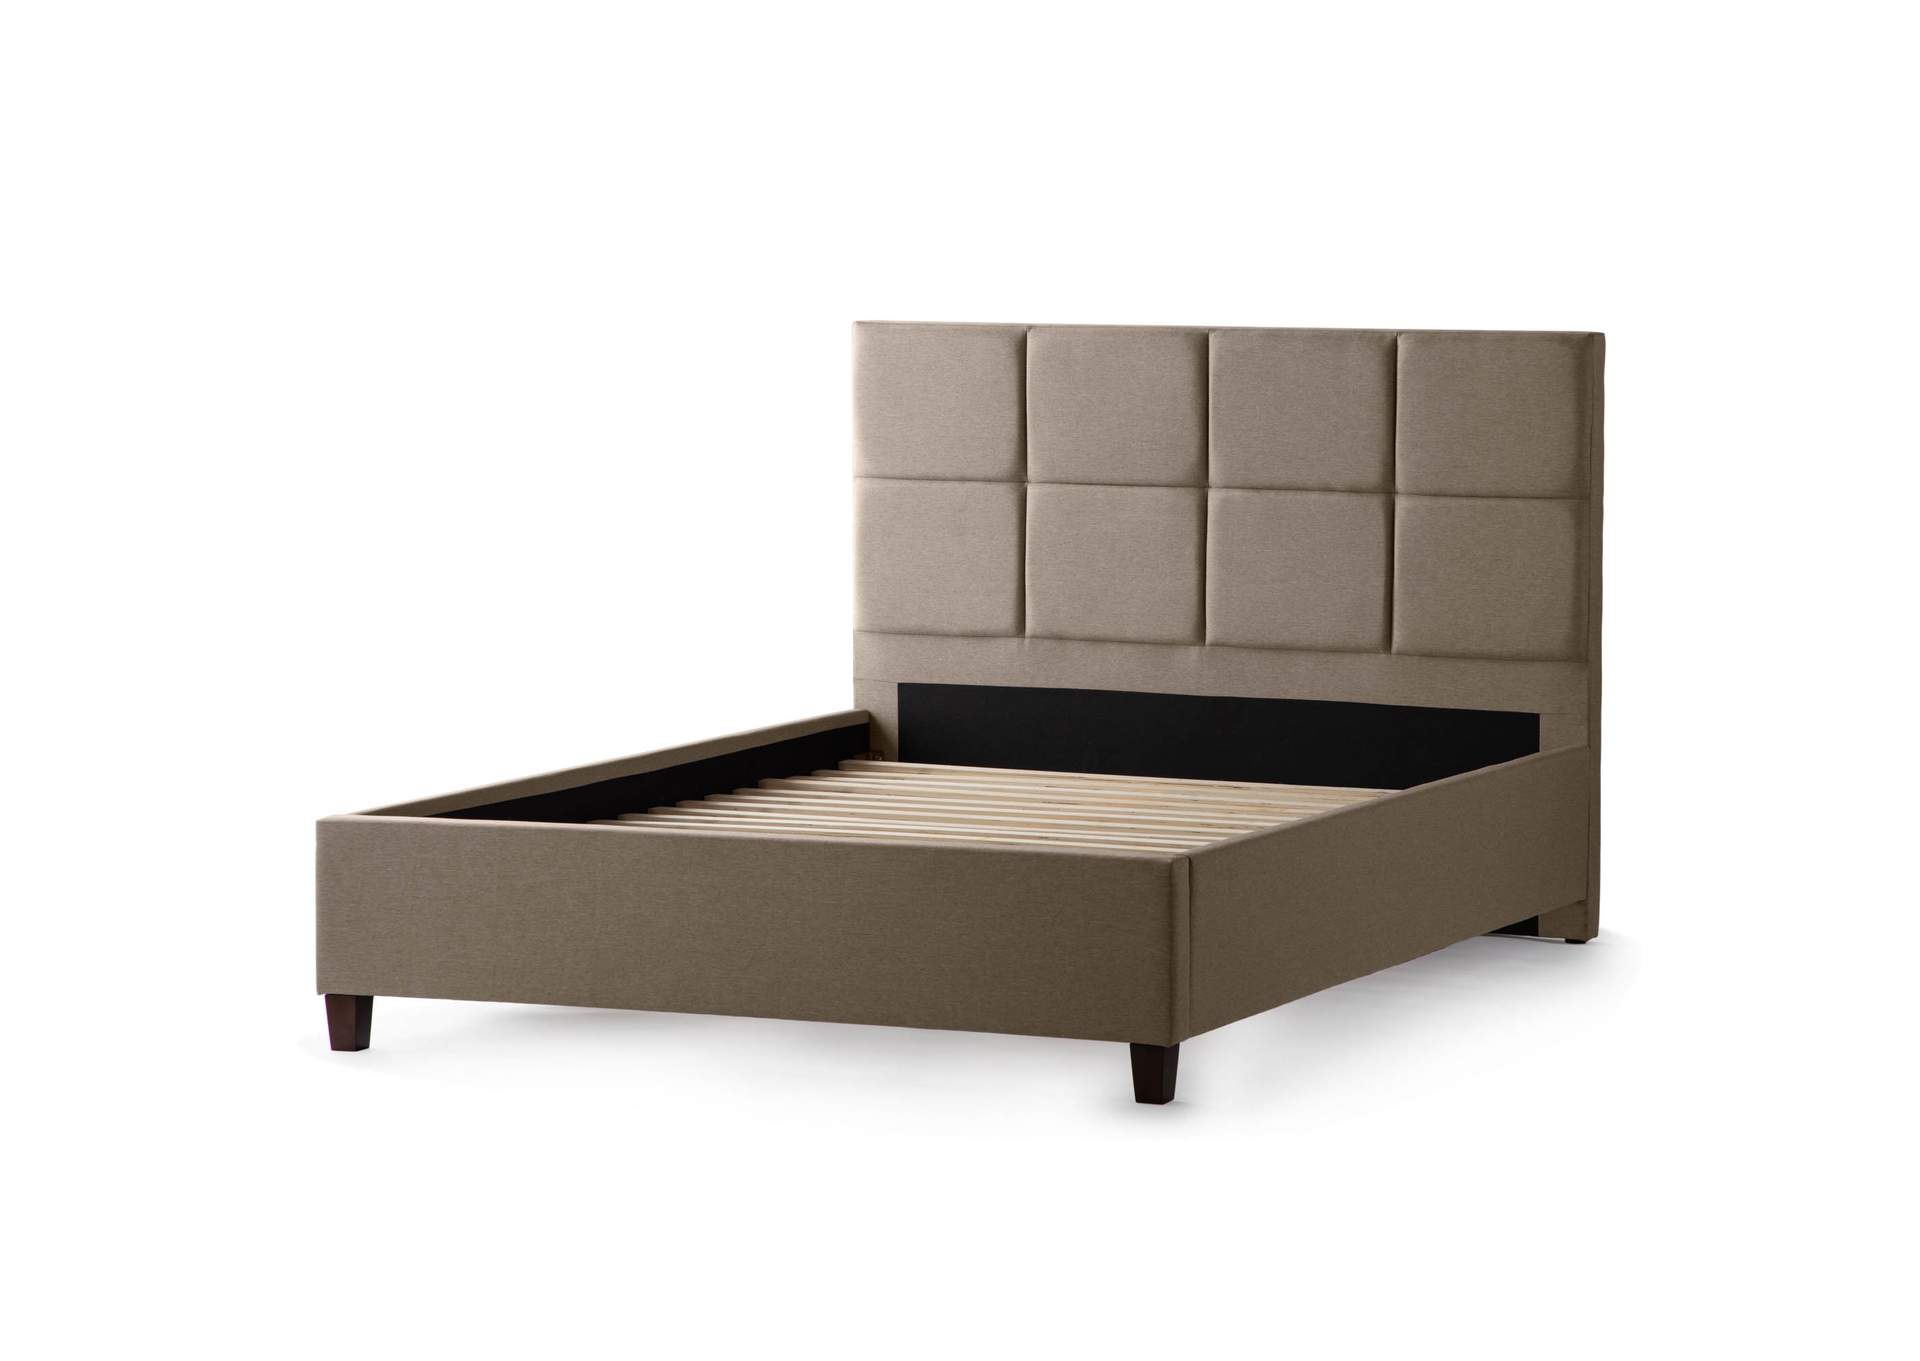 Malouf Charcoal Scoresby Upholstered Full Bed,Malouf